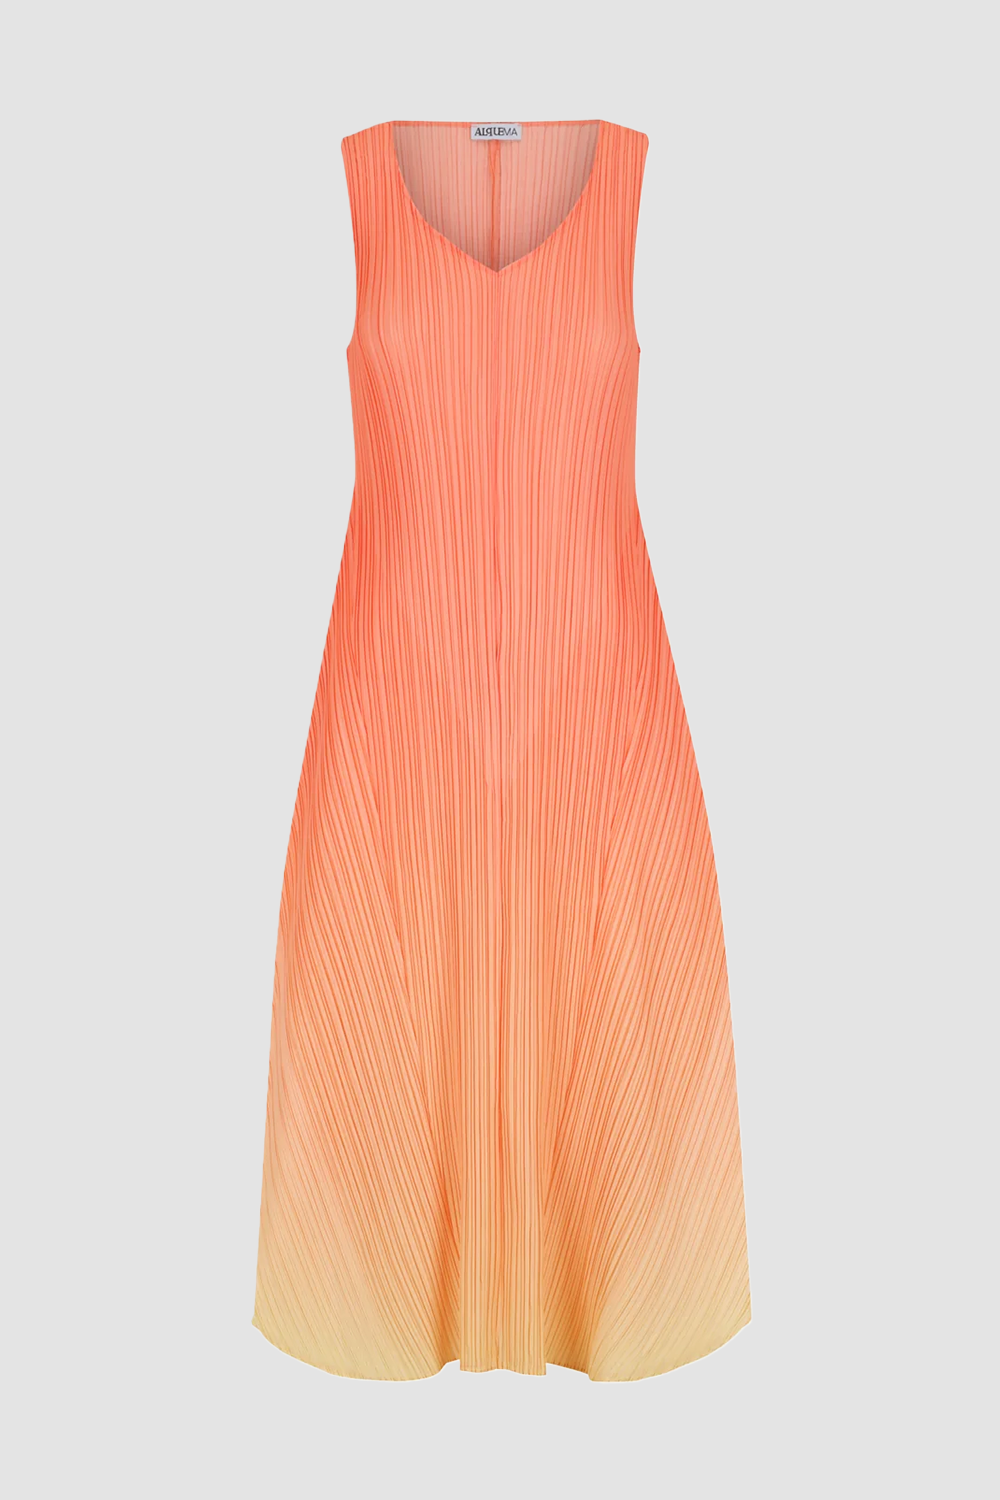 Estrella Dress in Peach Lemonade